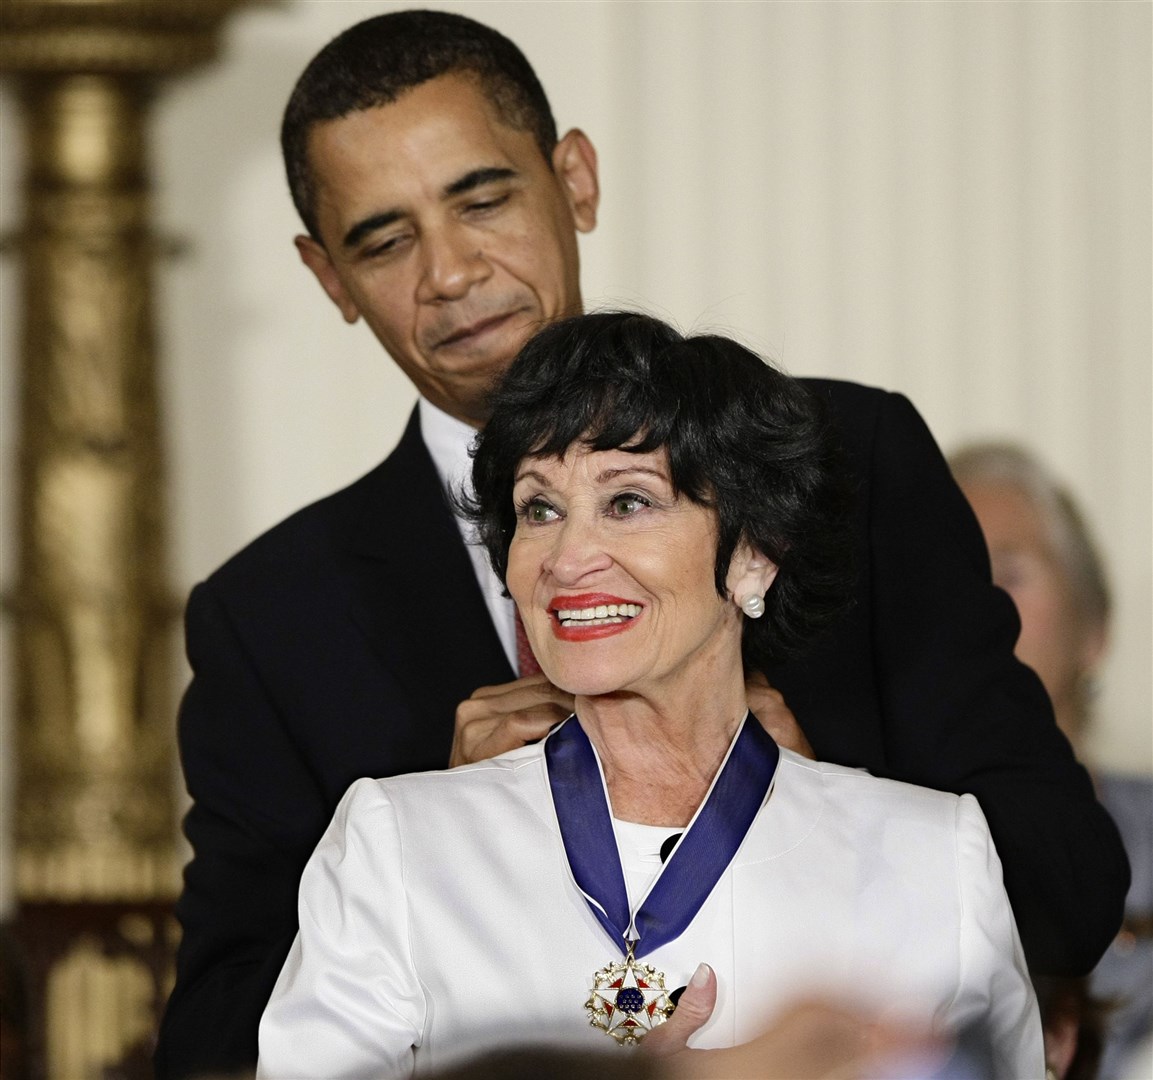 President Barack Obama presents the 2009 Presidential Medal of Freedom to Chita Rivera at the White House in Washington in 2009 (J Scott Applewhite/AP)